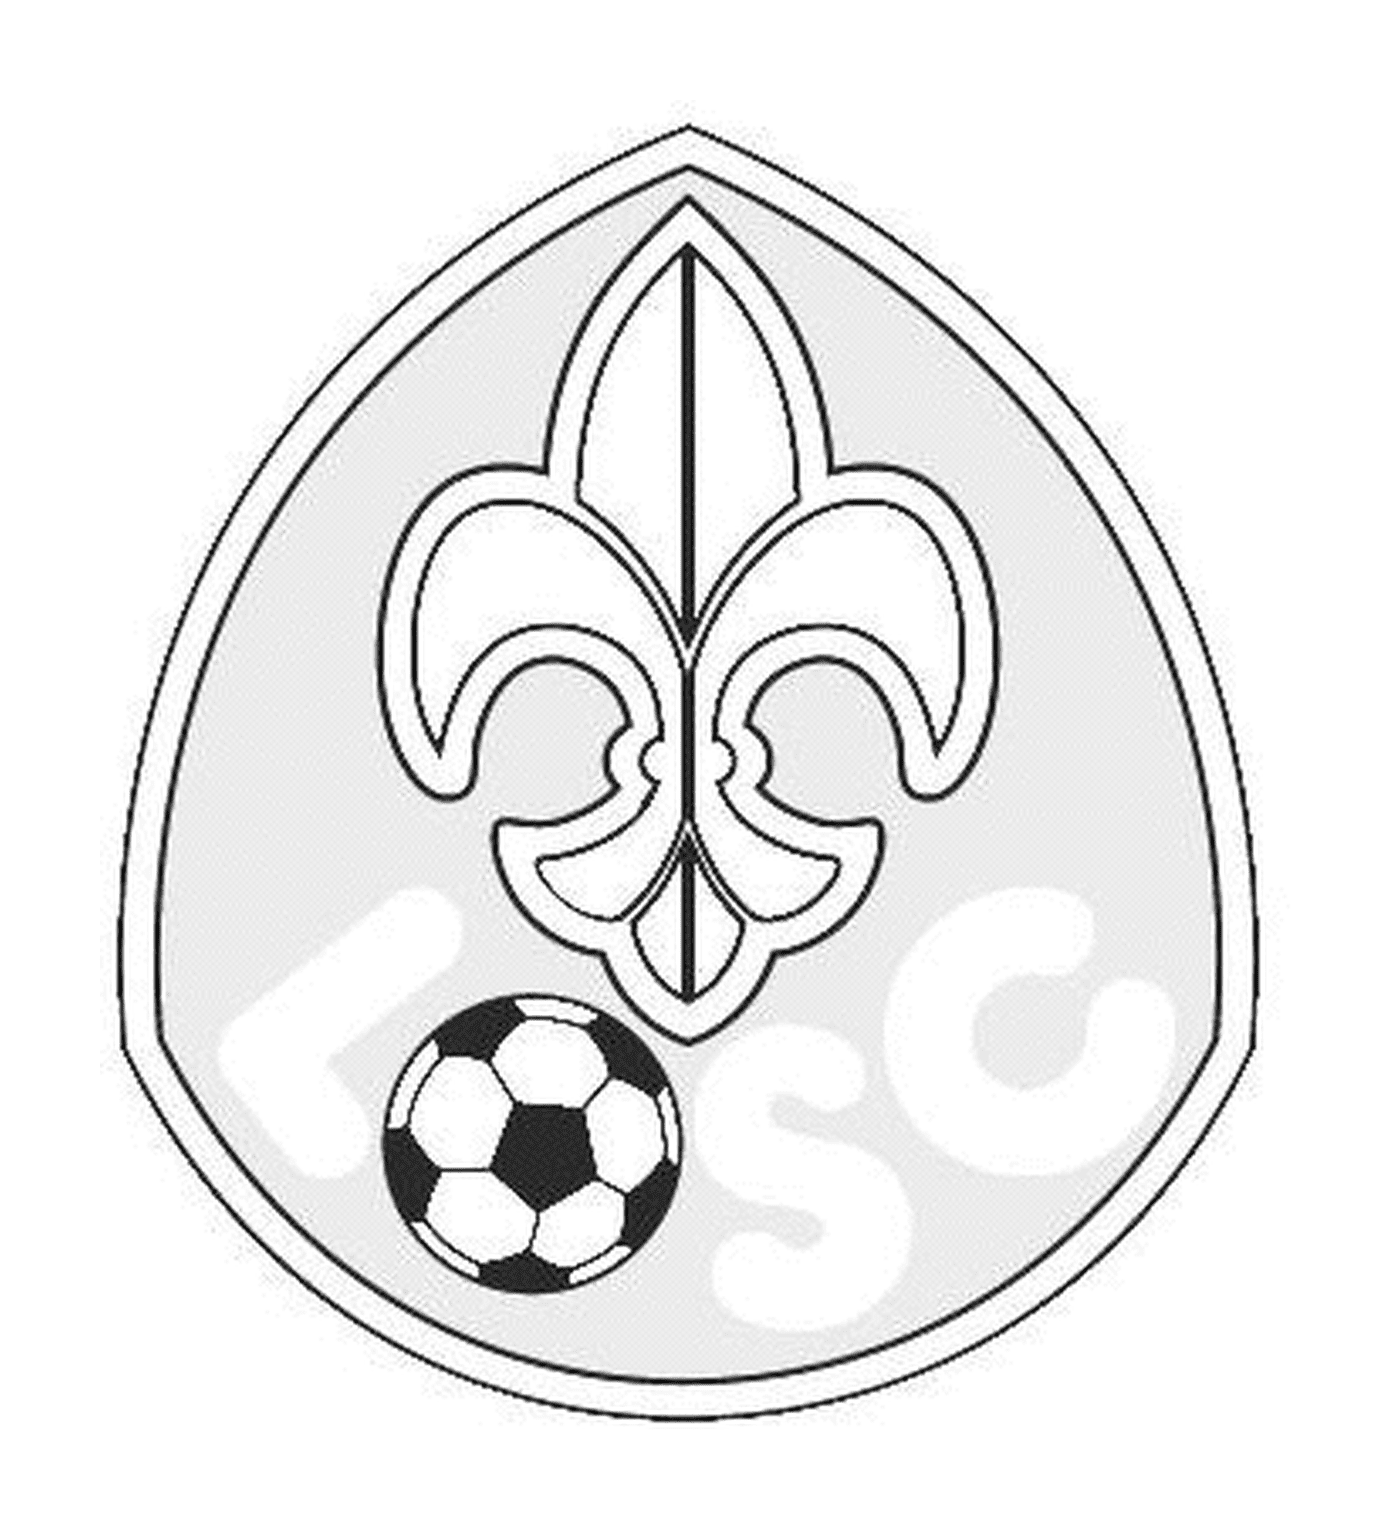  LOSC Lille Logo 